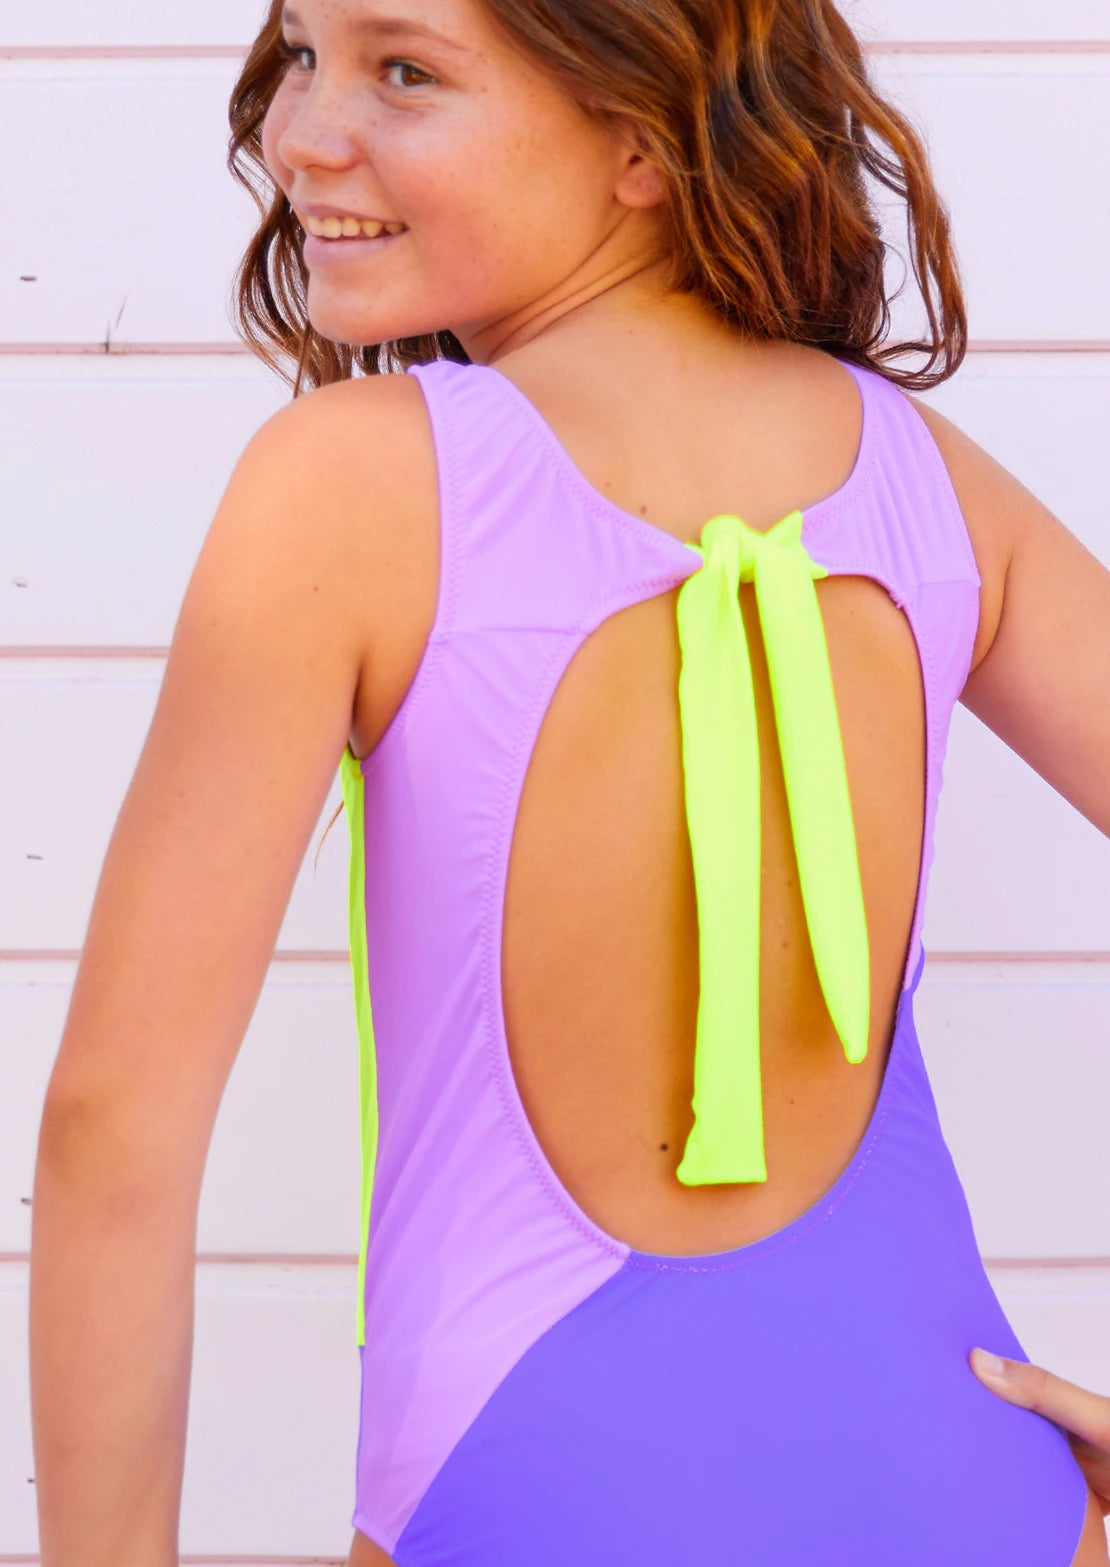 Bañador de To the Moon modelo Bardot Lila Flúor ideal para niñas y teens color lila, amarillo flúor y morado.